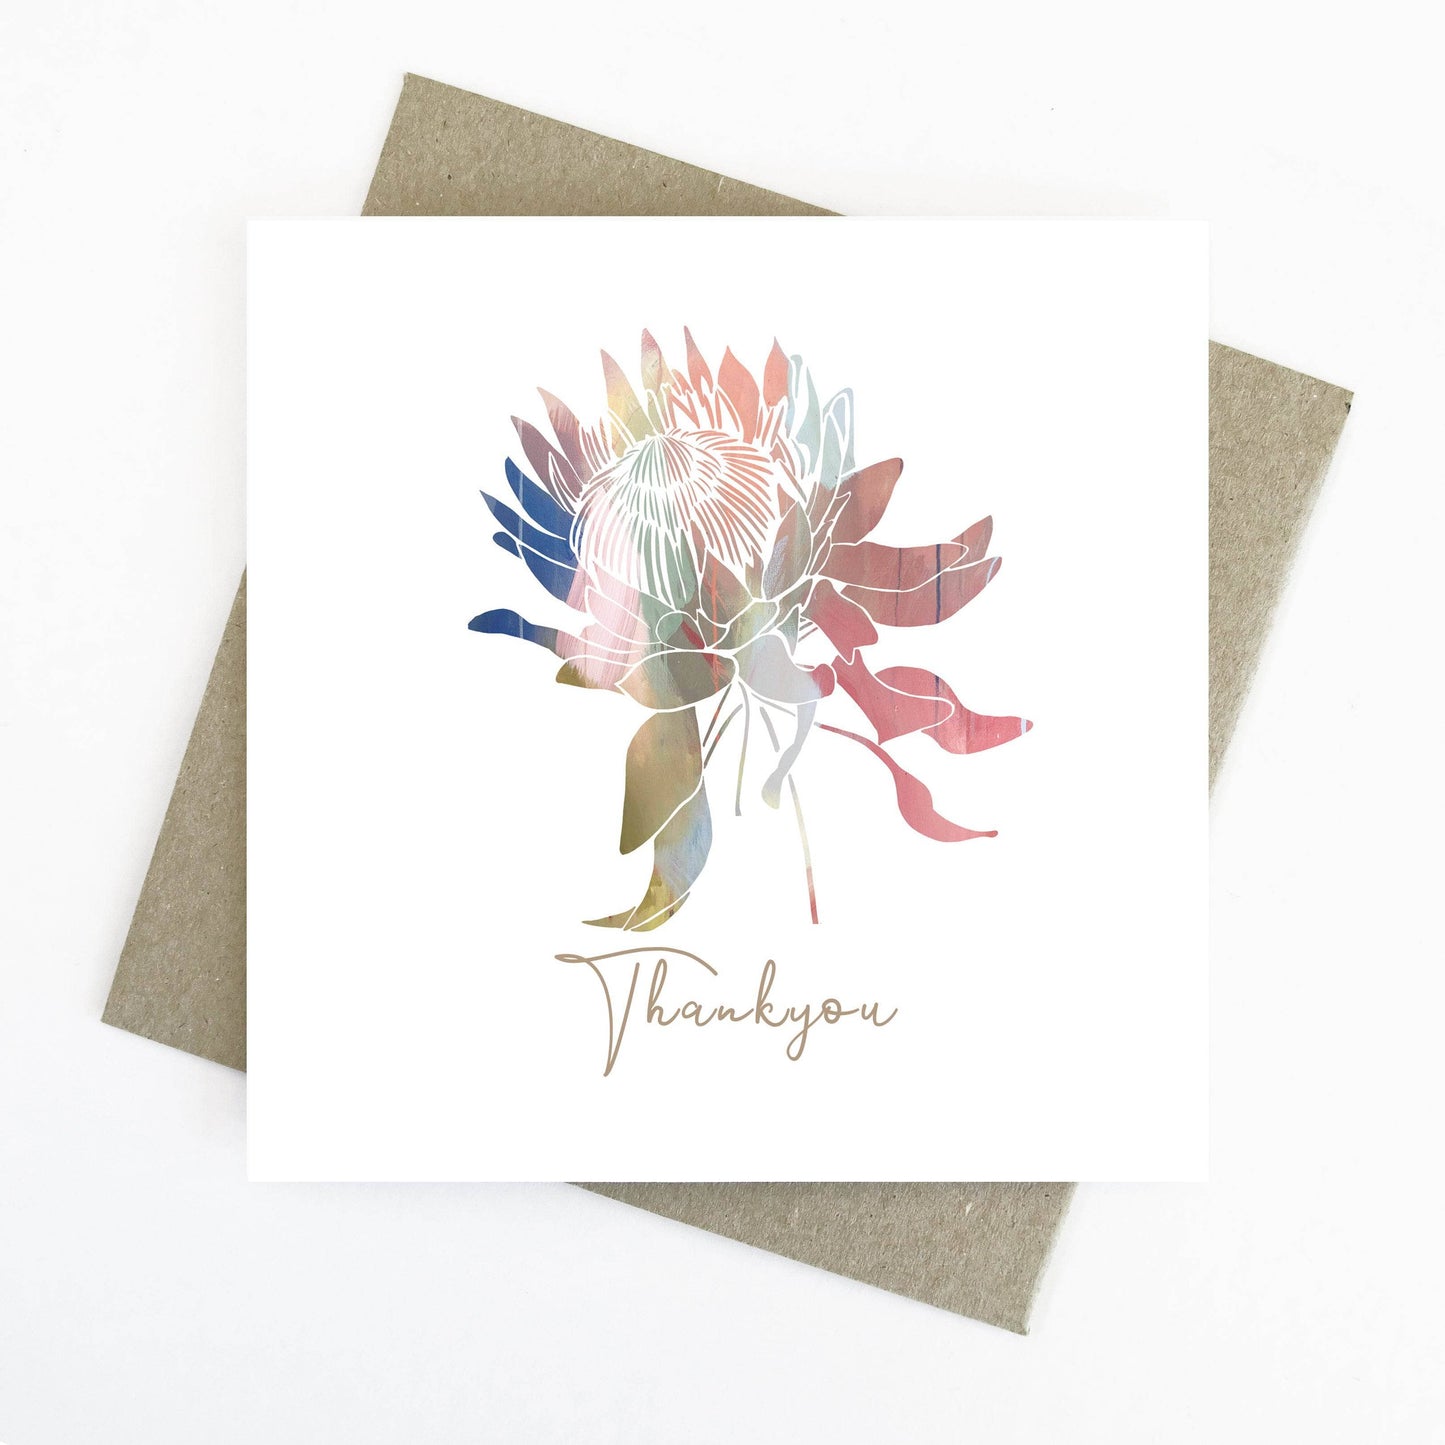 Thankyou - Wildflower Greeting Card